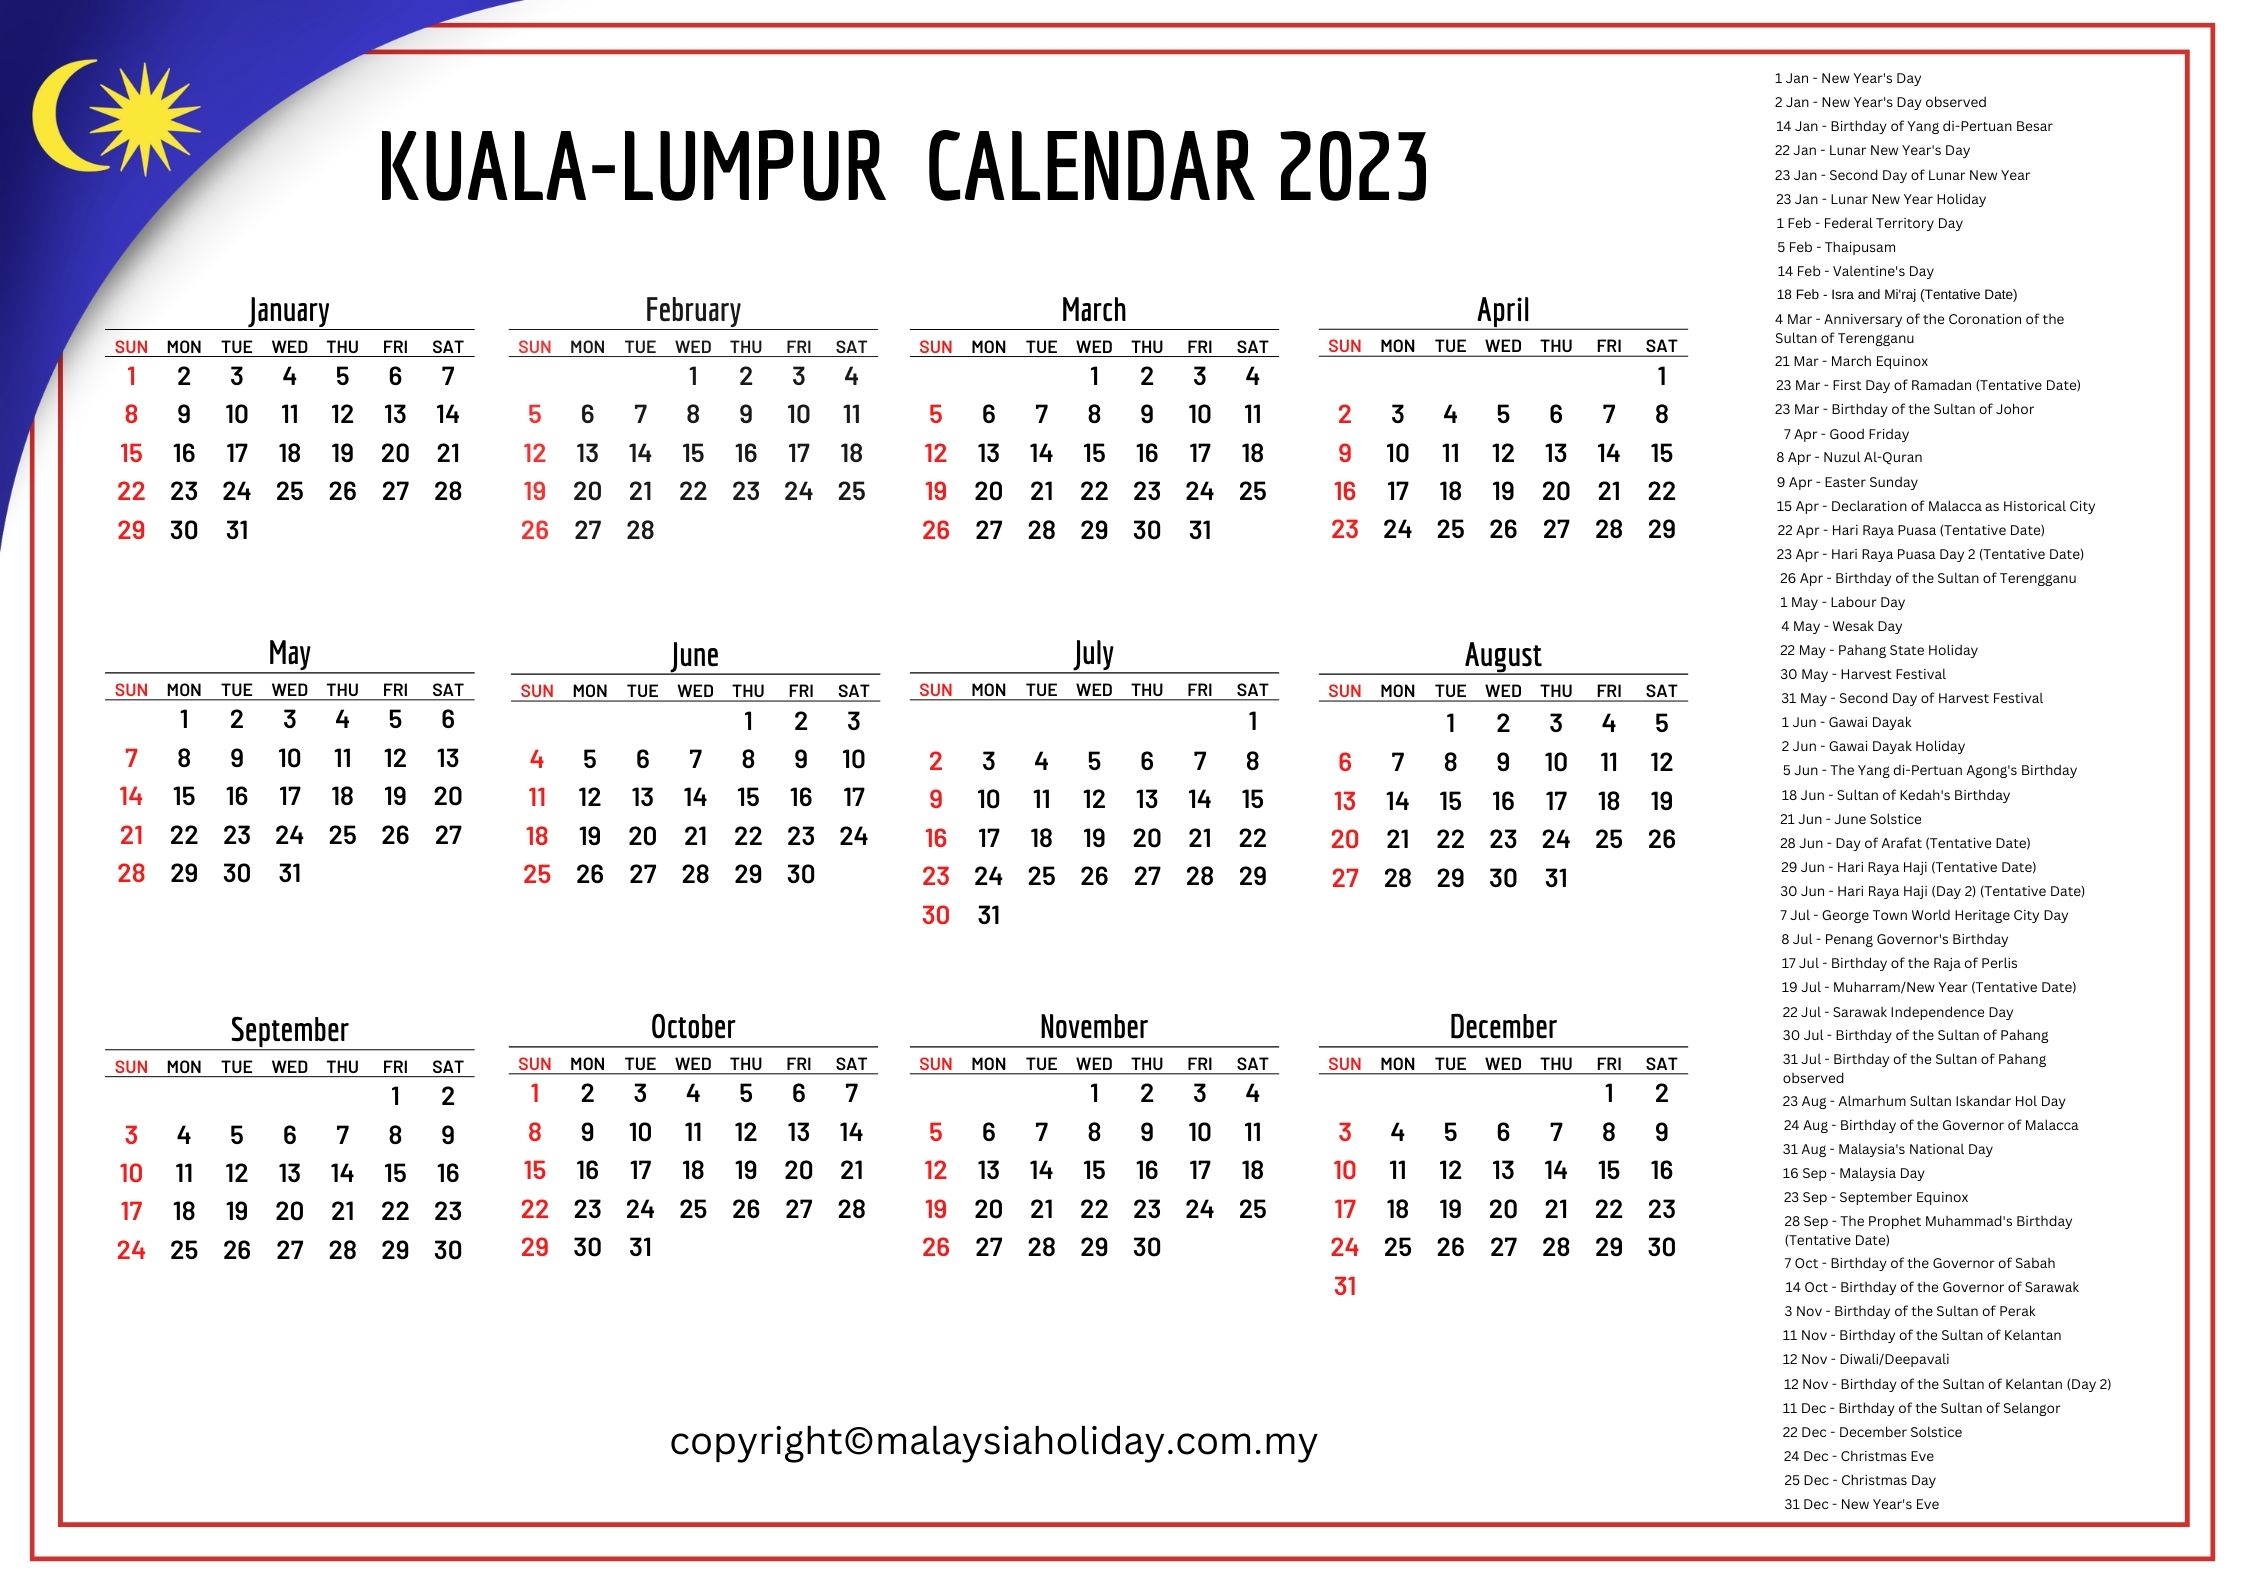 Public Holidays 2023 Kuala Lumpur